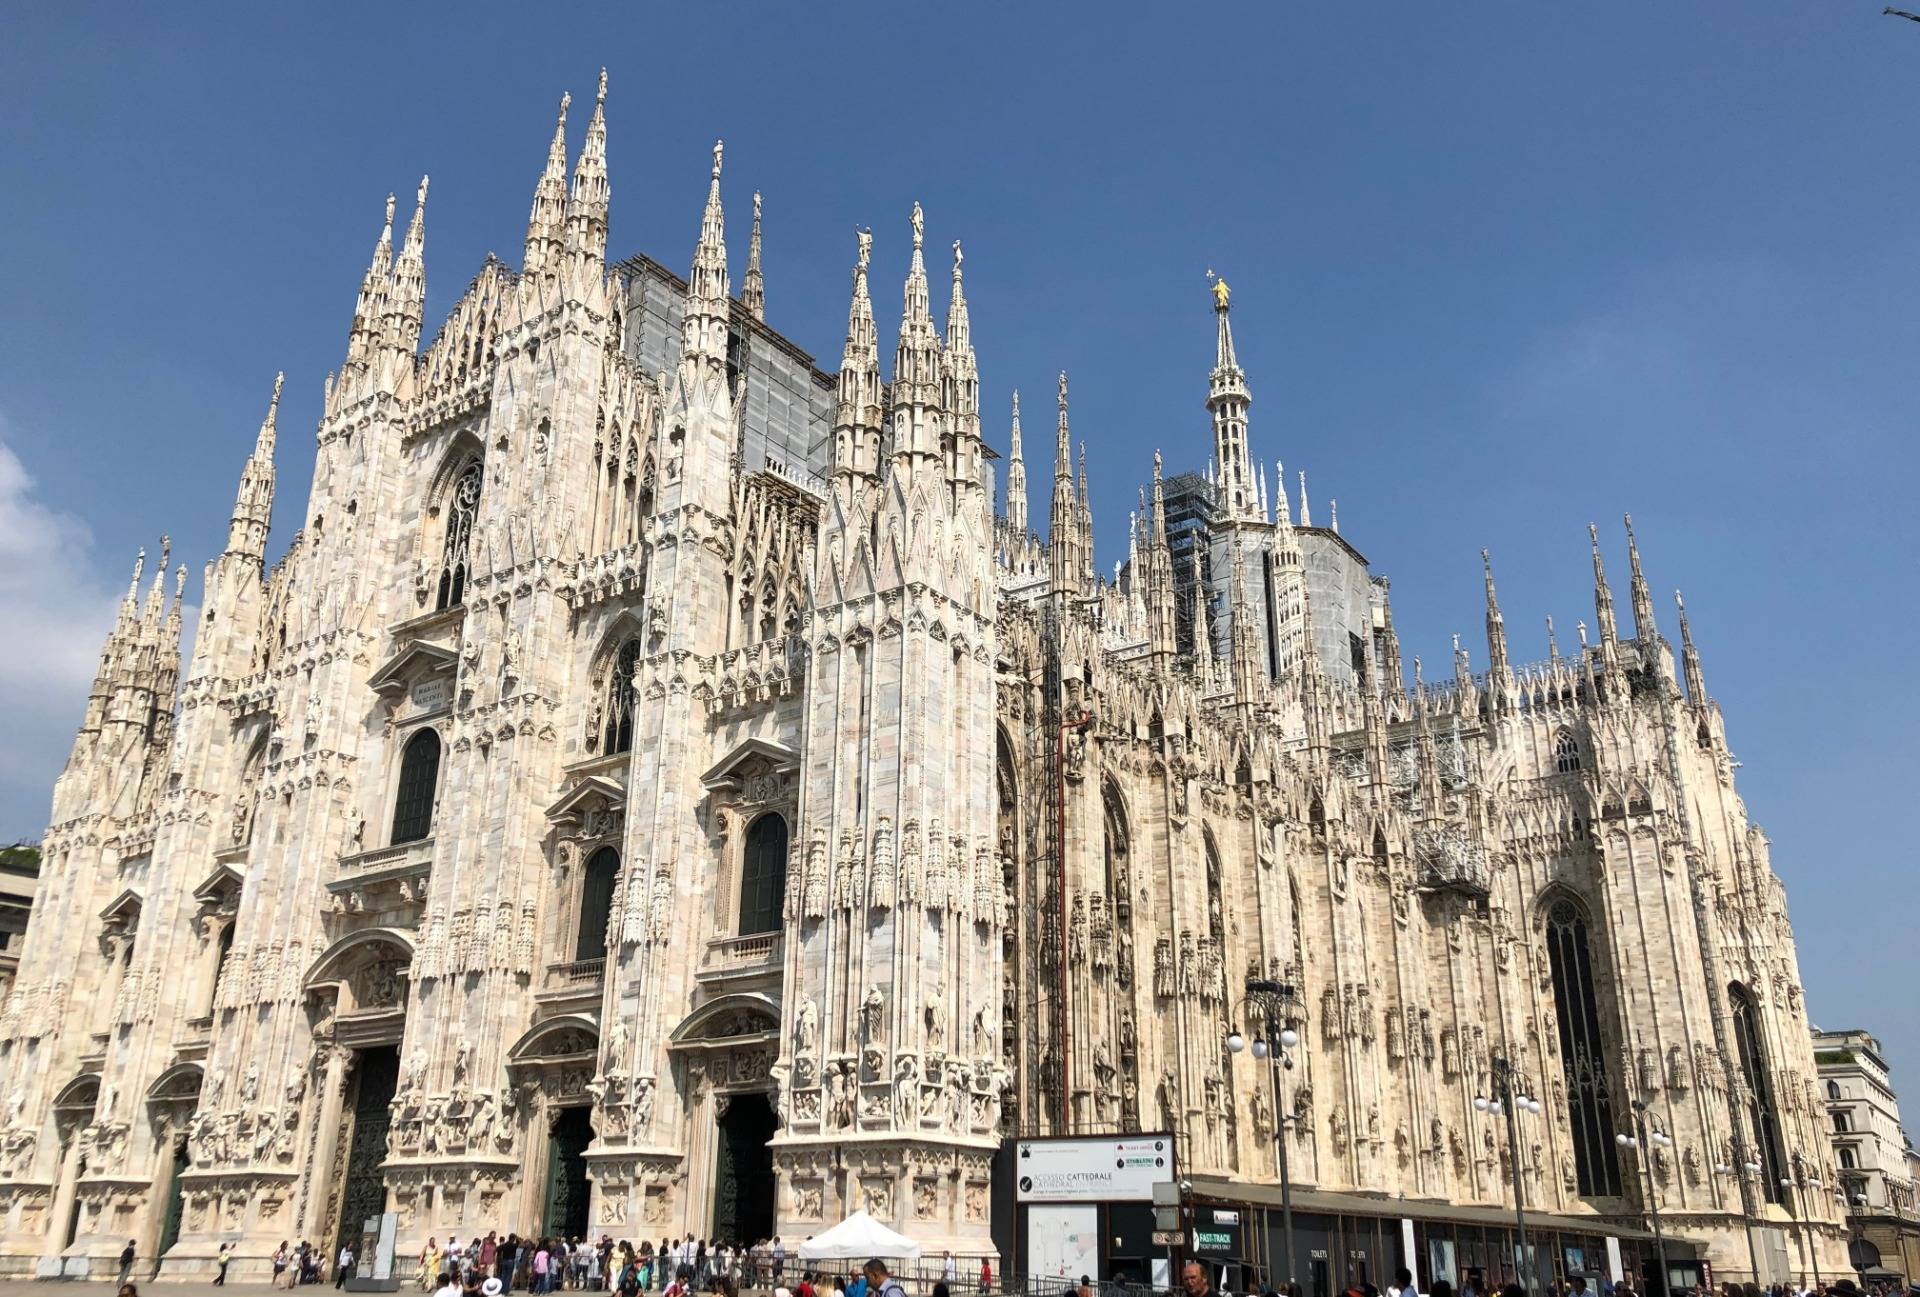 My Travel Photos - Italy - Duomo di Milano